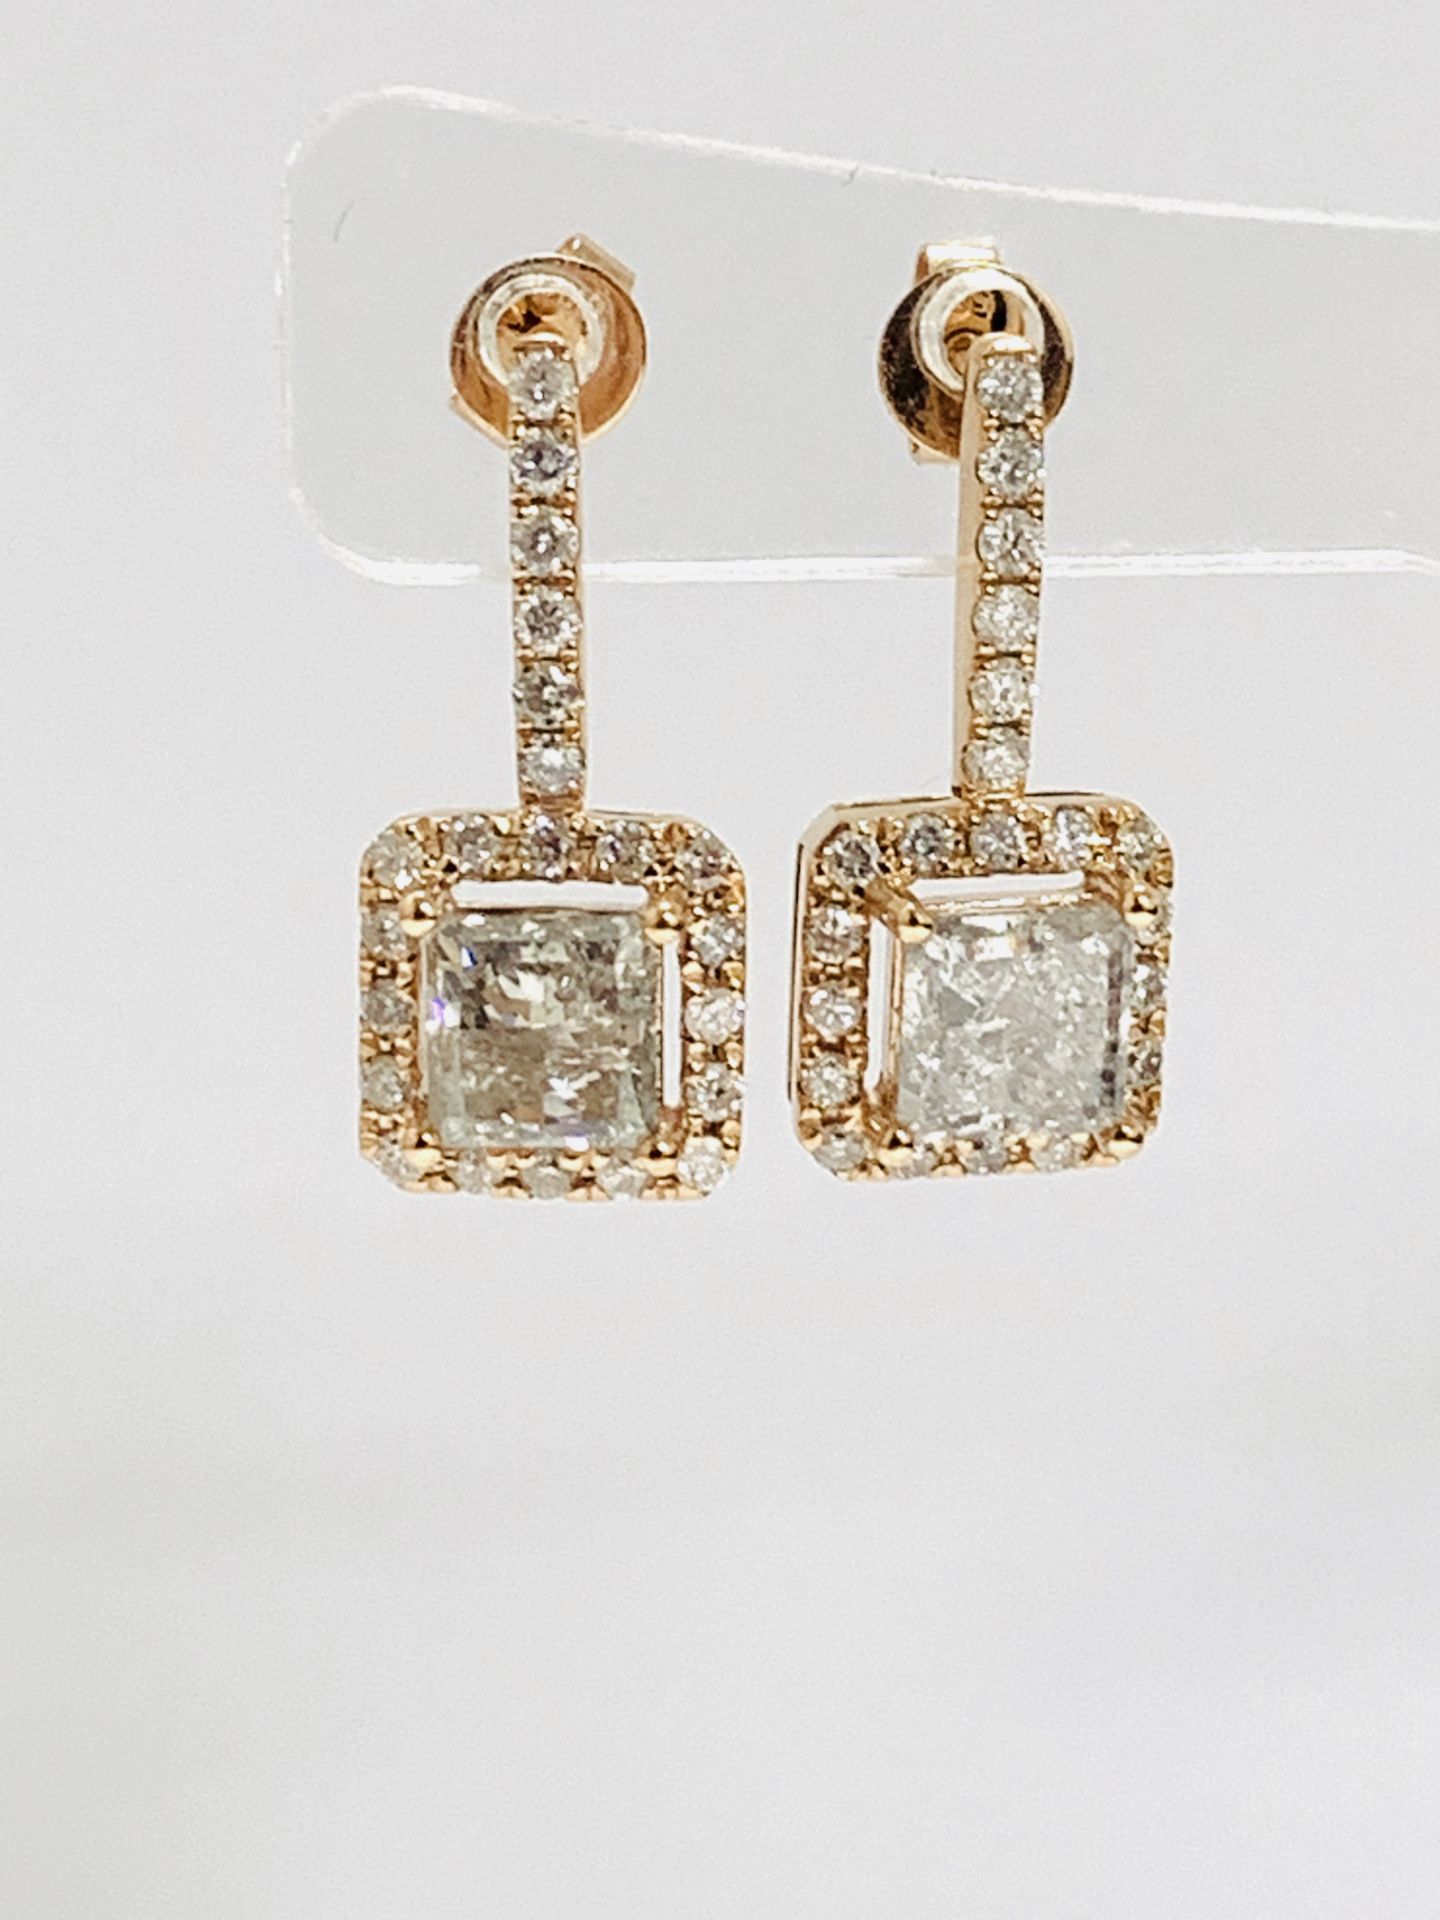 14K Rose Gold Pair Of Earrings - Image 6 of 8